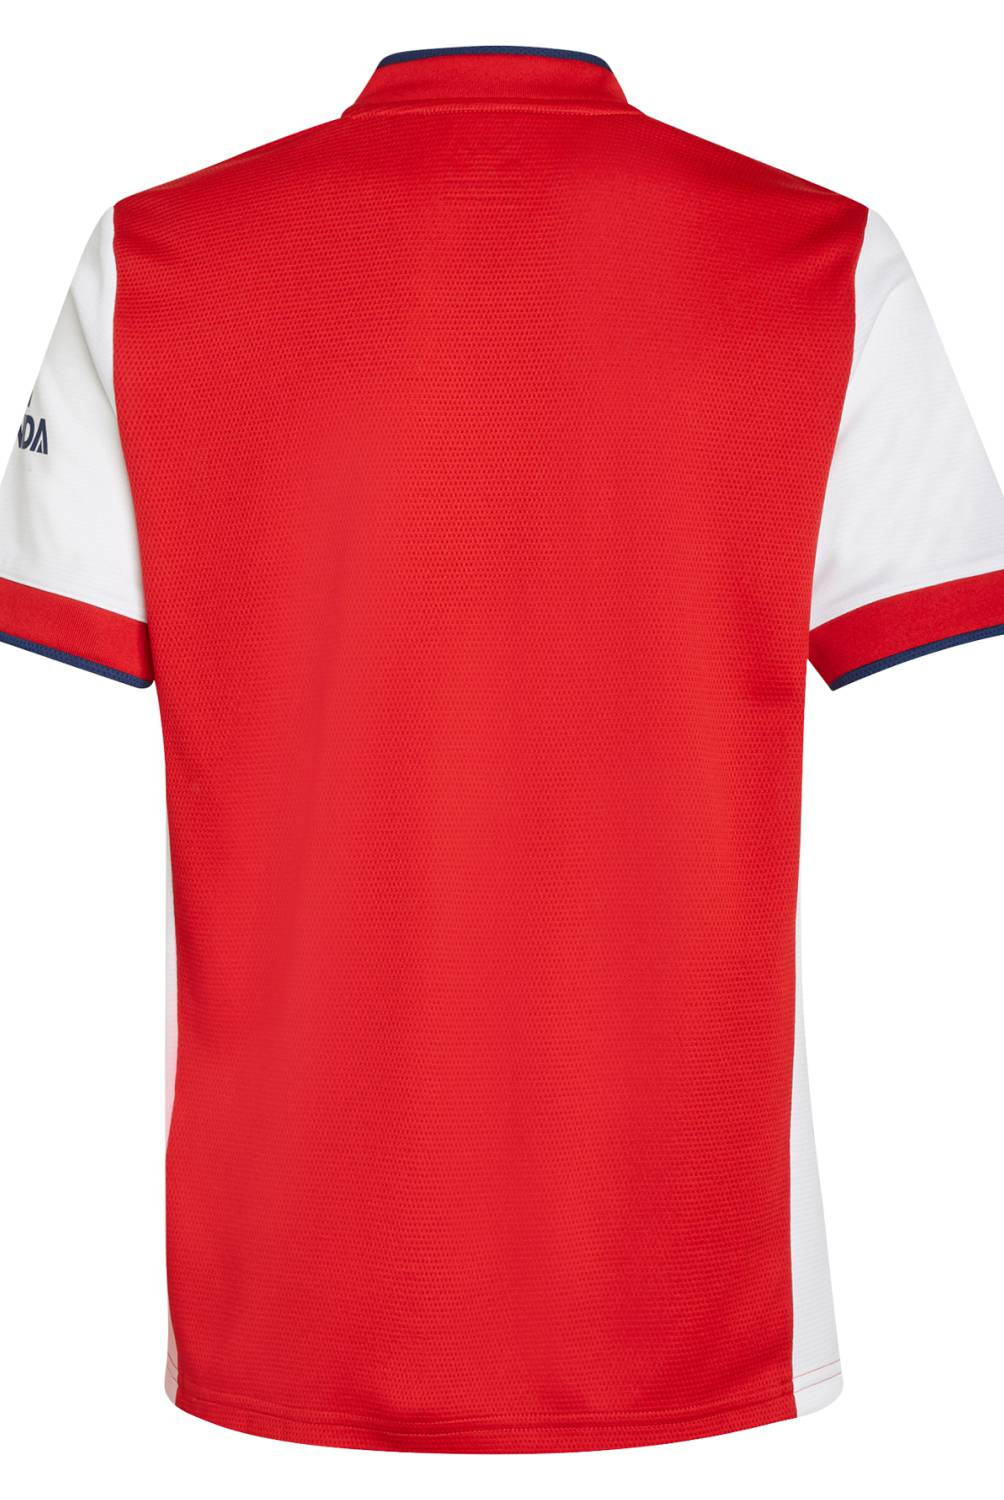 Adidas - Adidas Camiseta de Fútbol Arsenal Local Niño